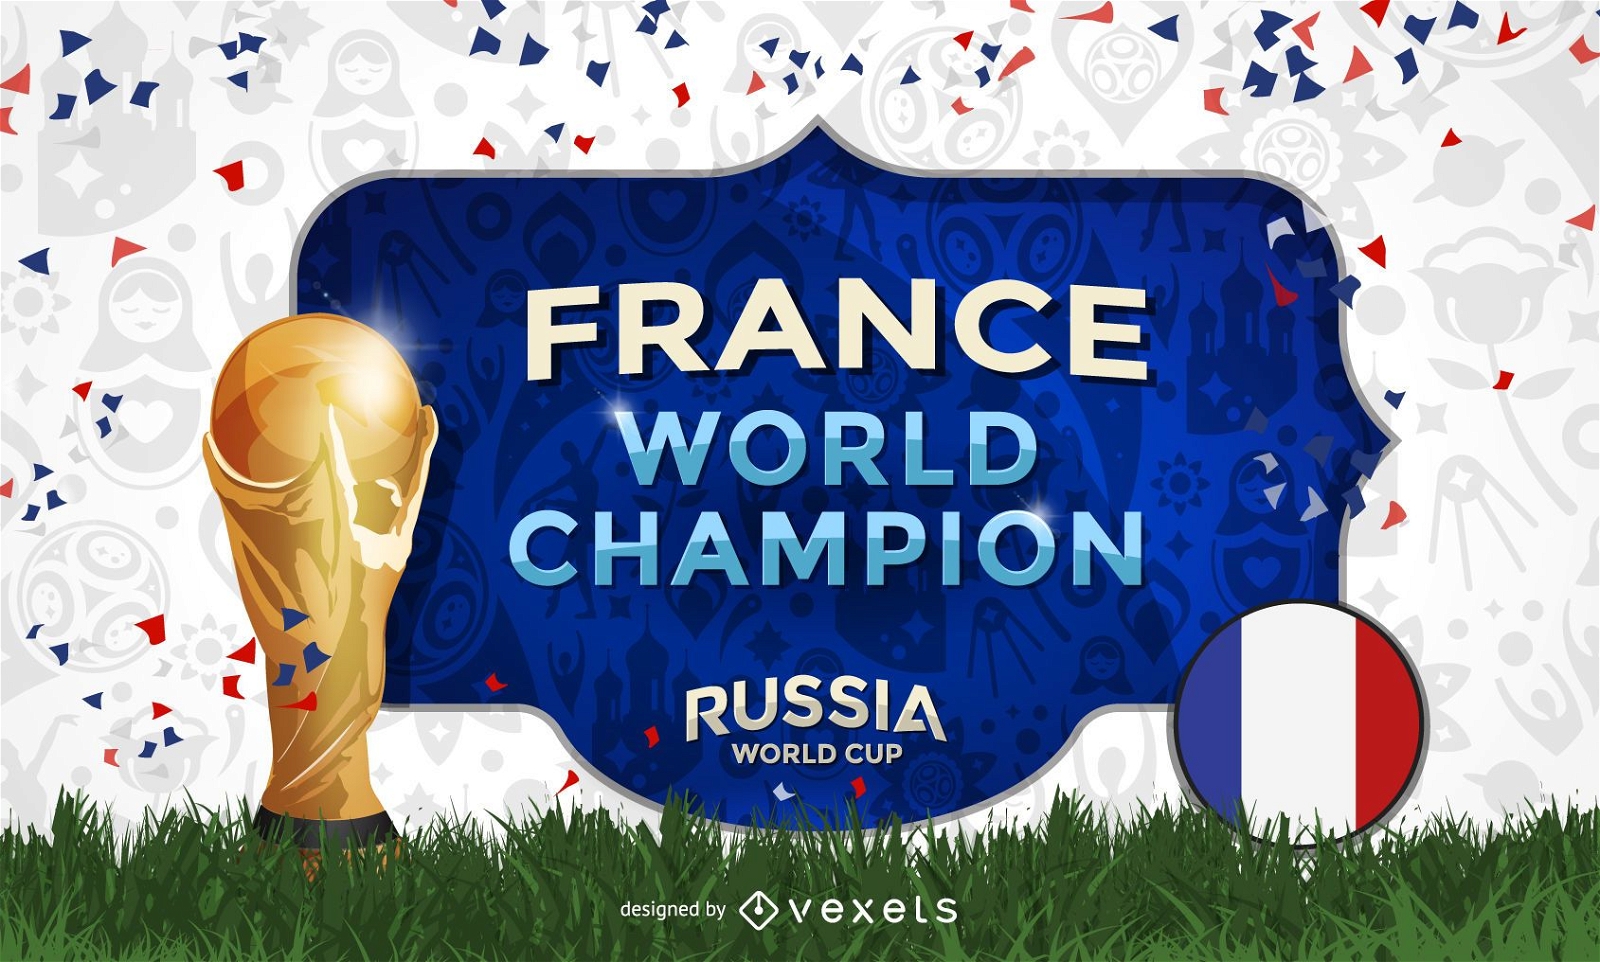 France World Cup winner